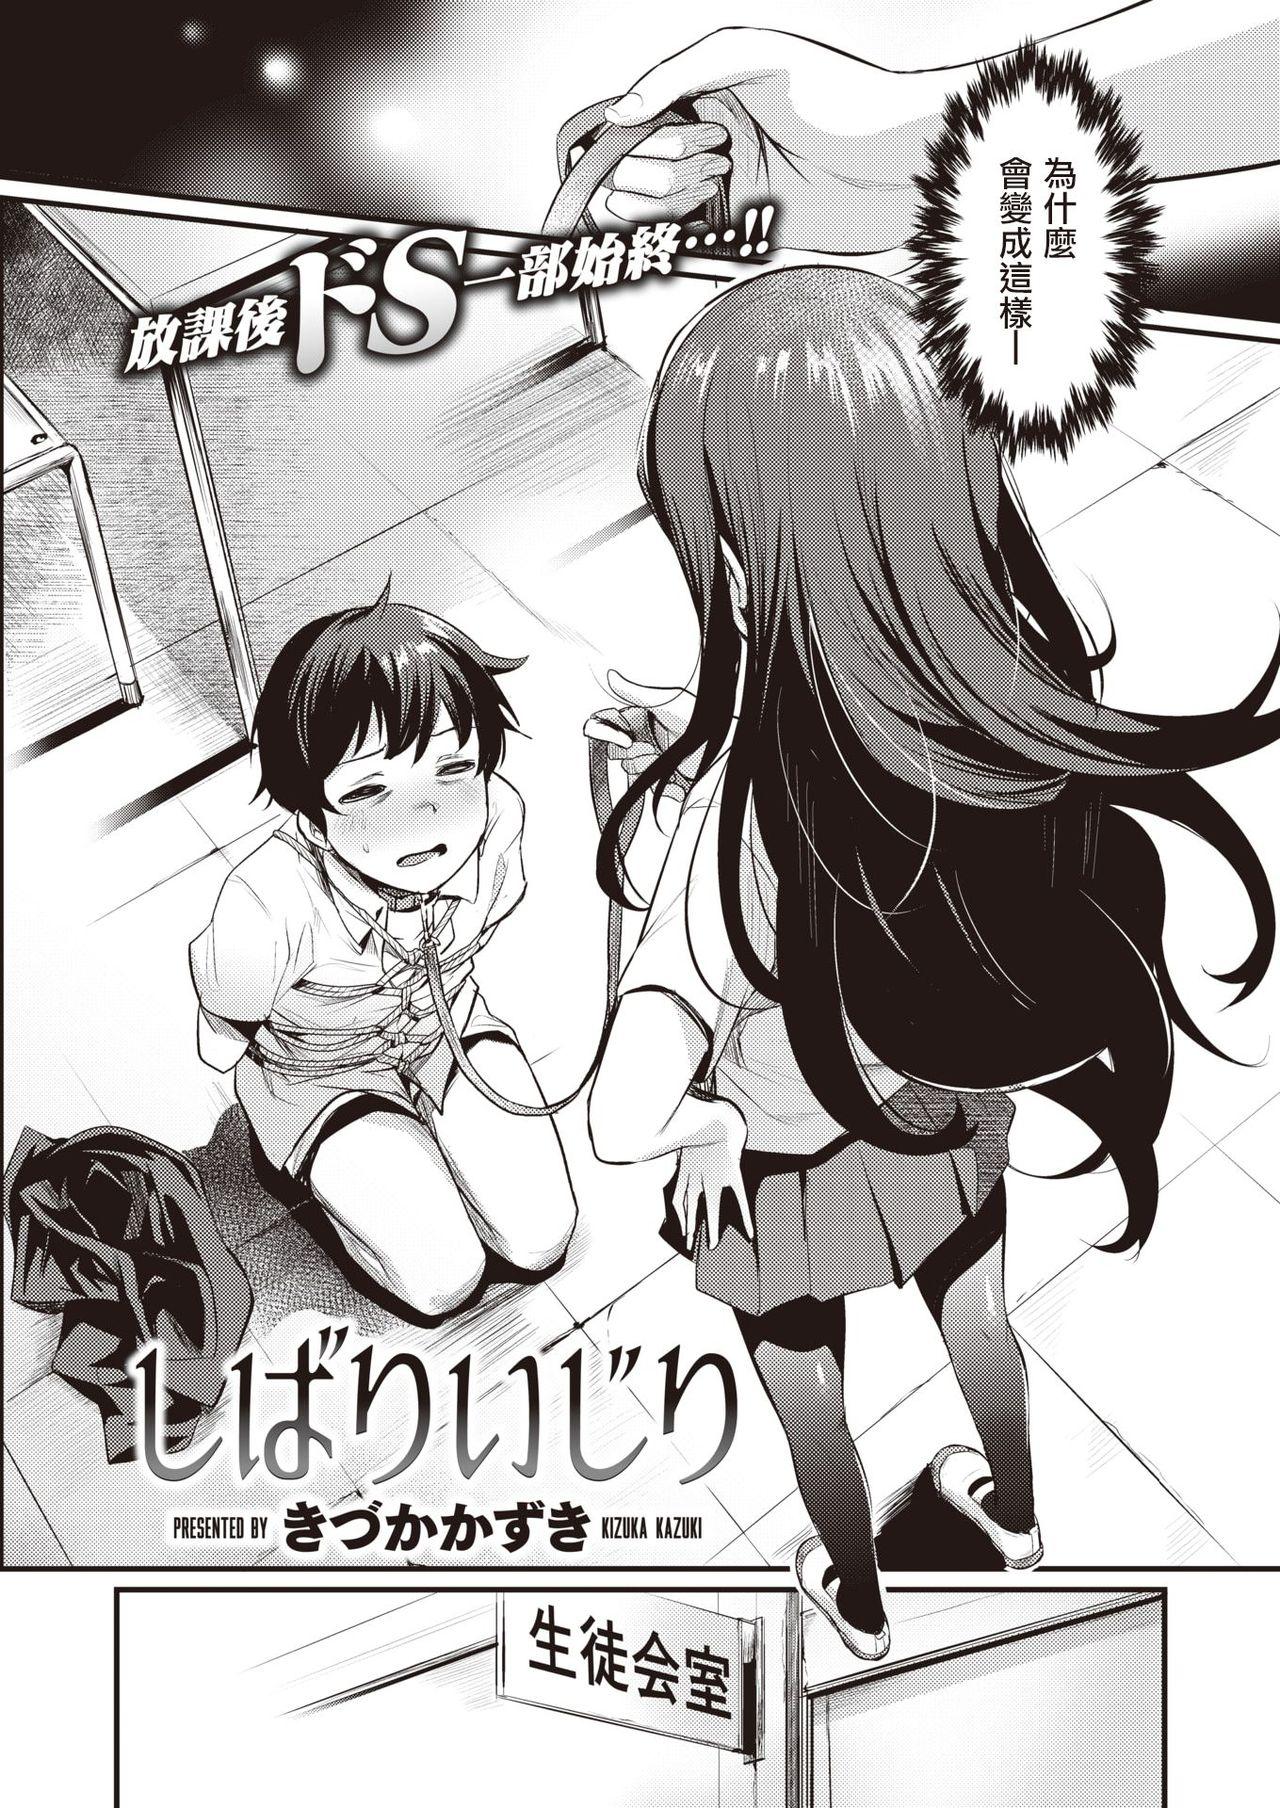 Shibari manga